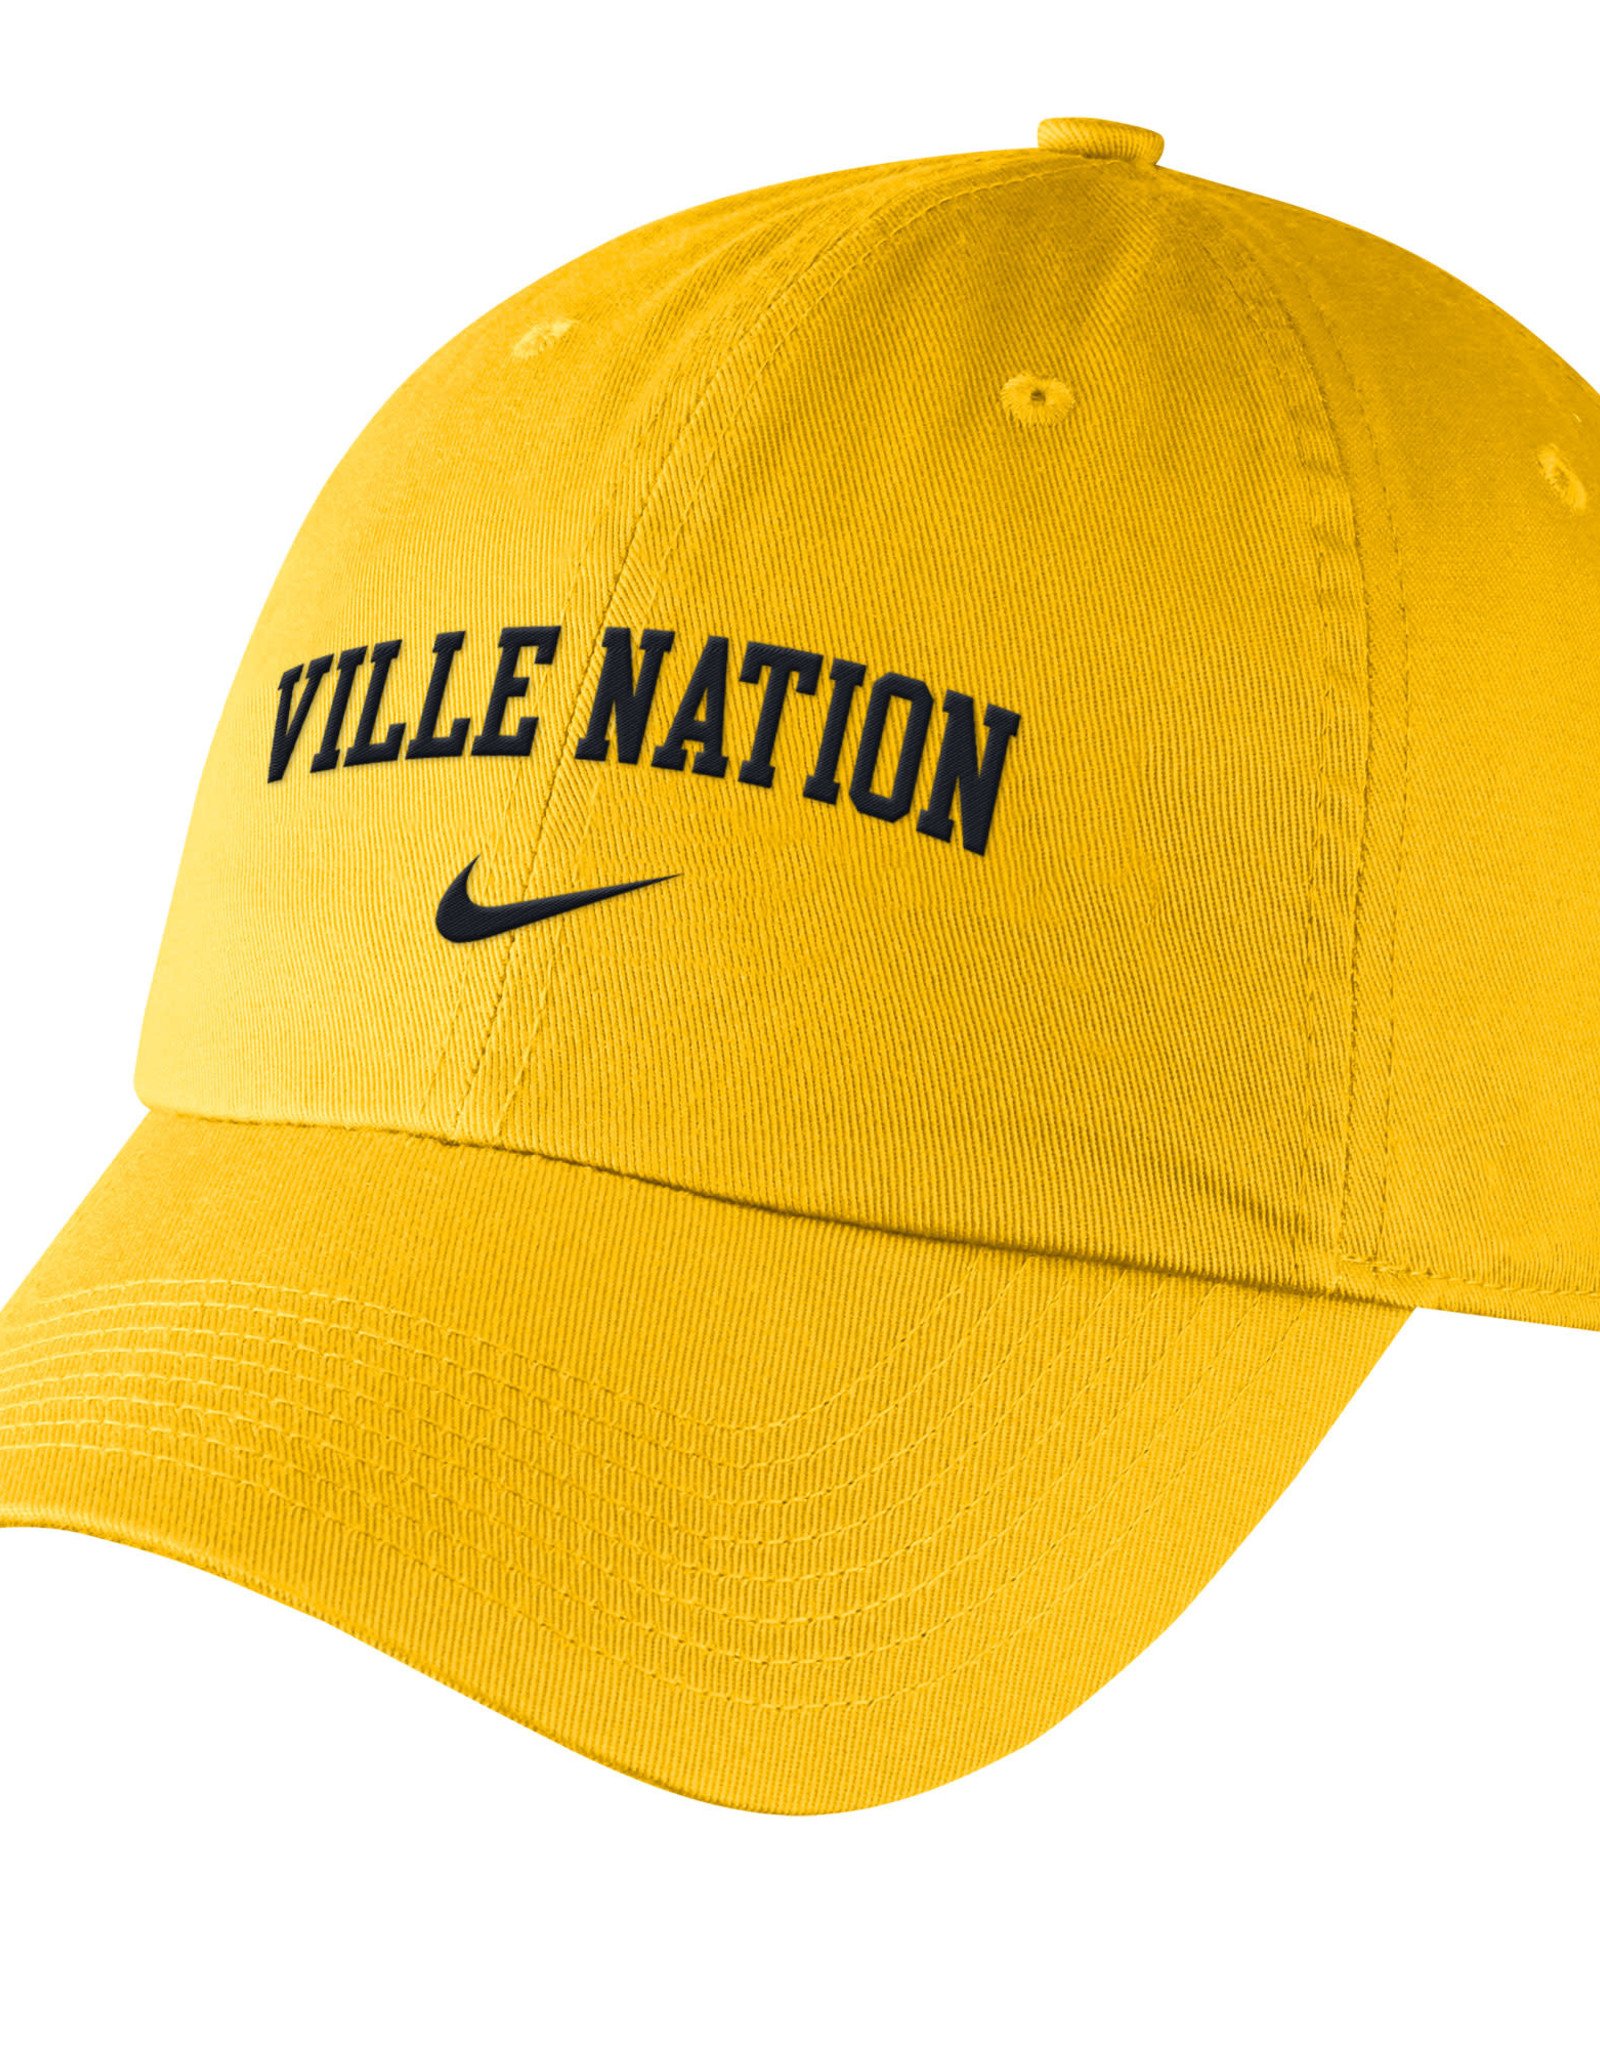 Nike Nike Gold Ville Nation Campus Cap